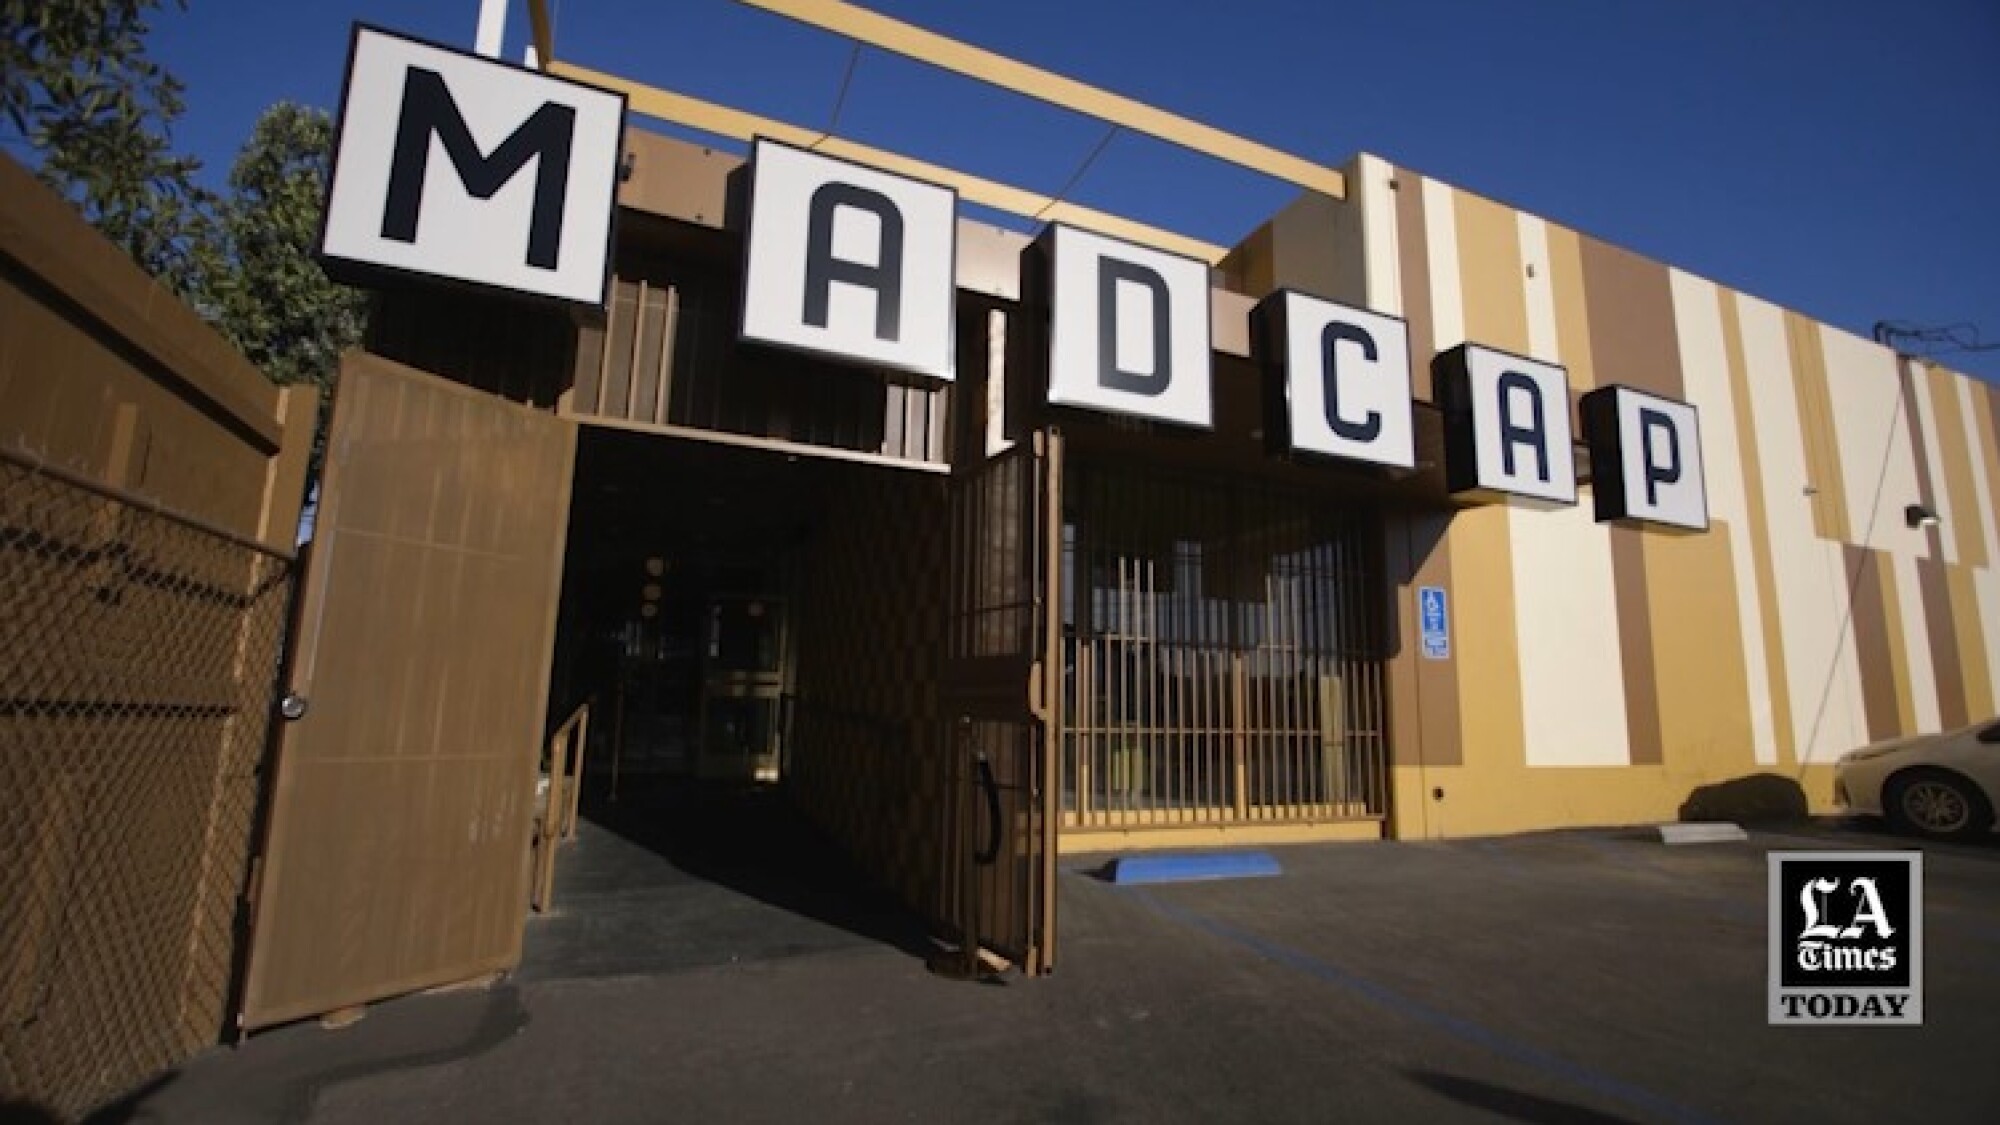 the madcap motel